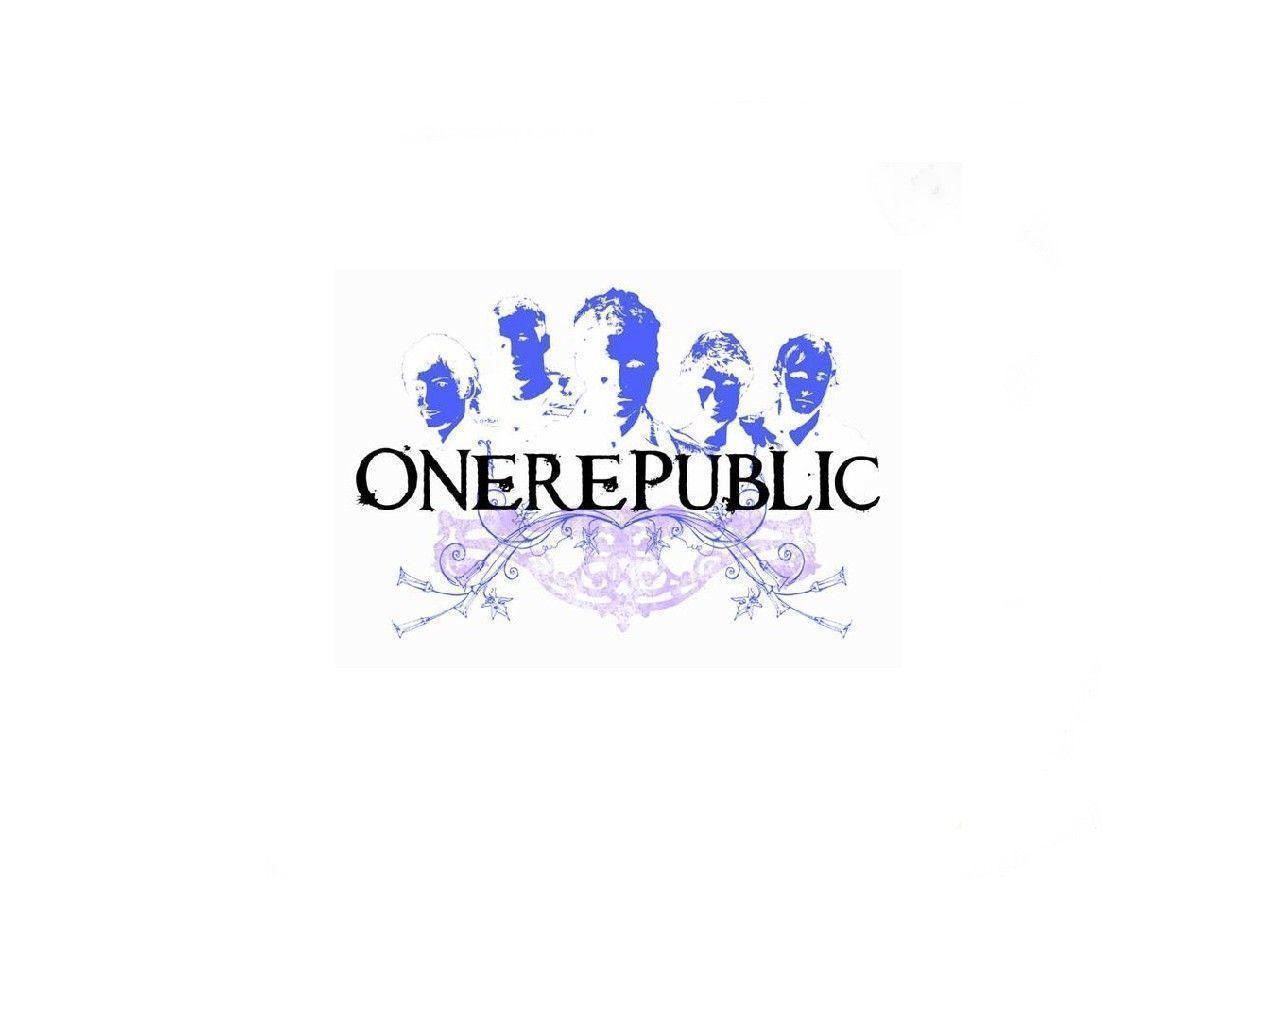 OneRepublic Wallpaper. HD Wallpaper Base